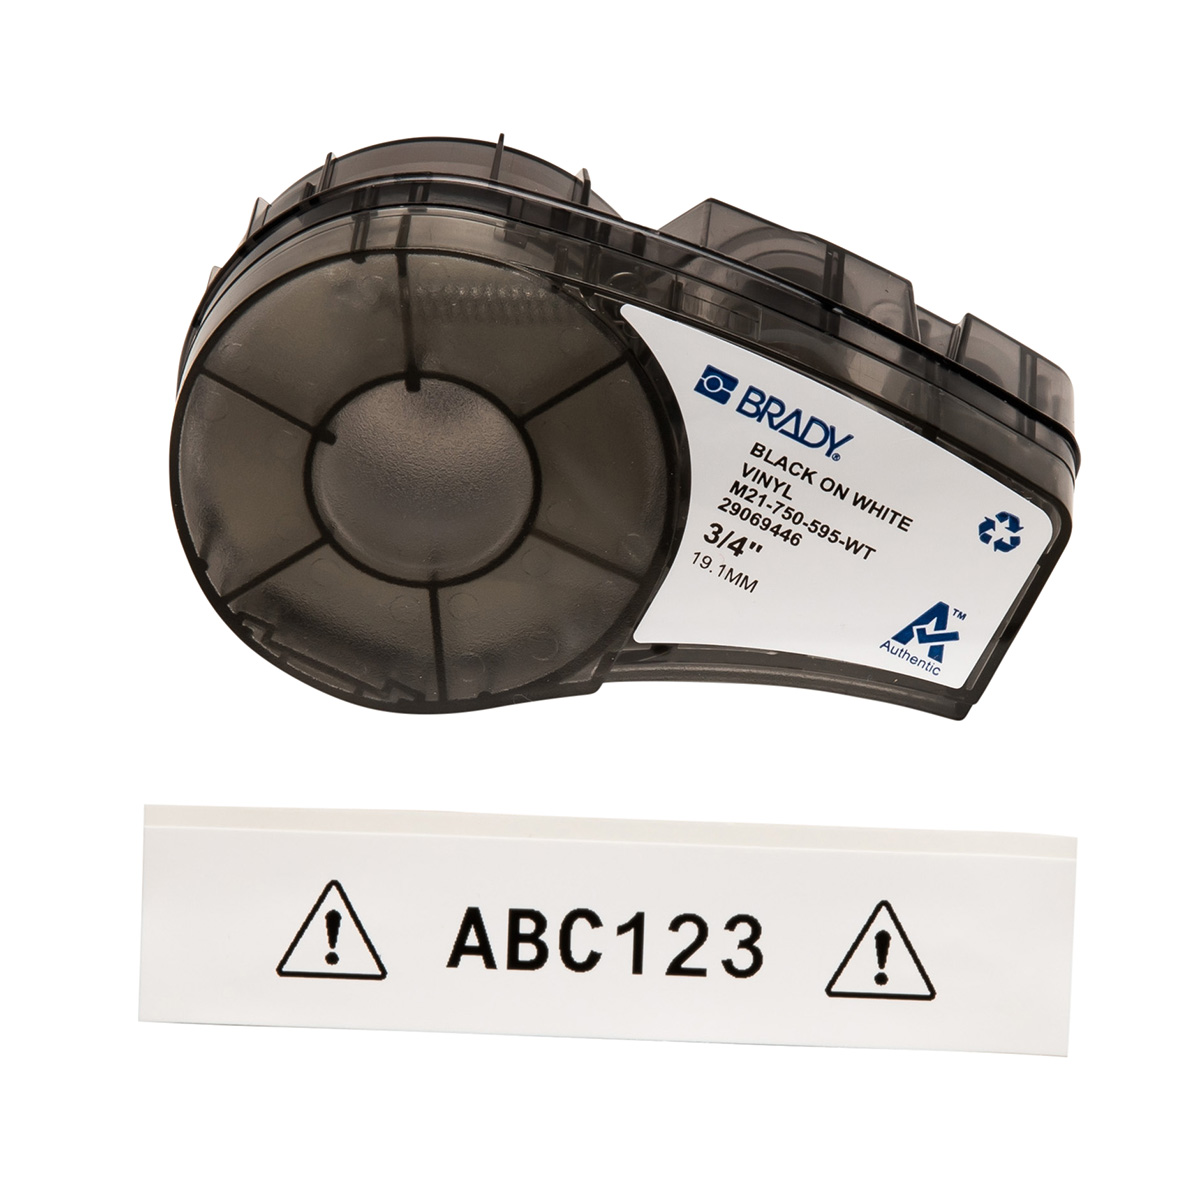 W 3PK Compatible for BRADY M21-750-595-WT Label Cartridge,Black/White,3/4 In 